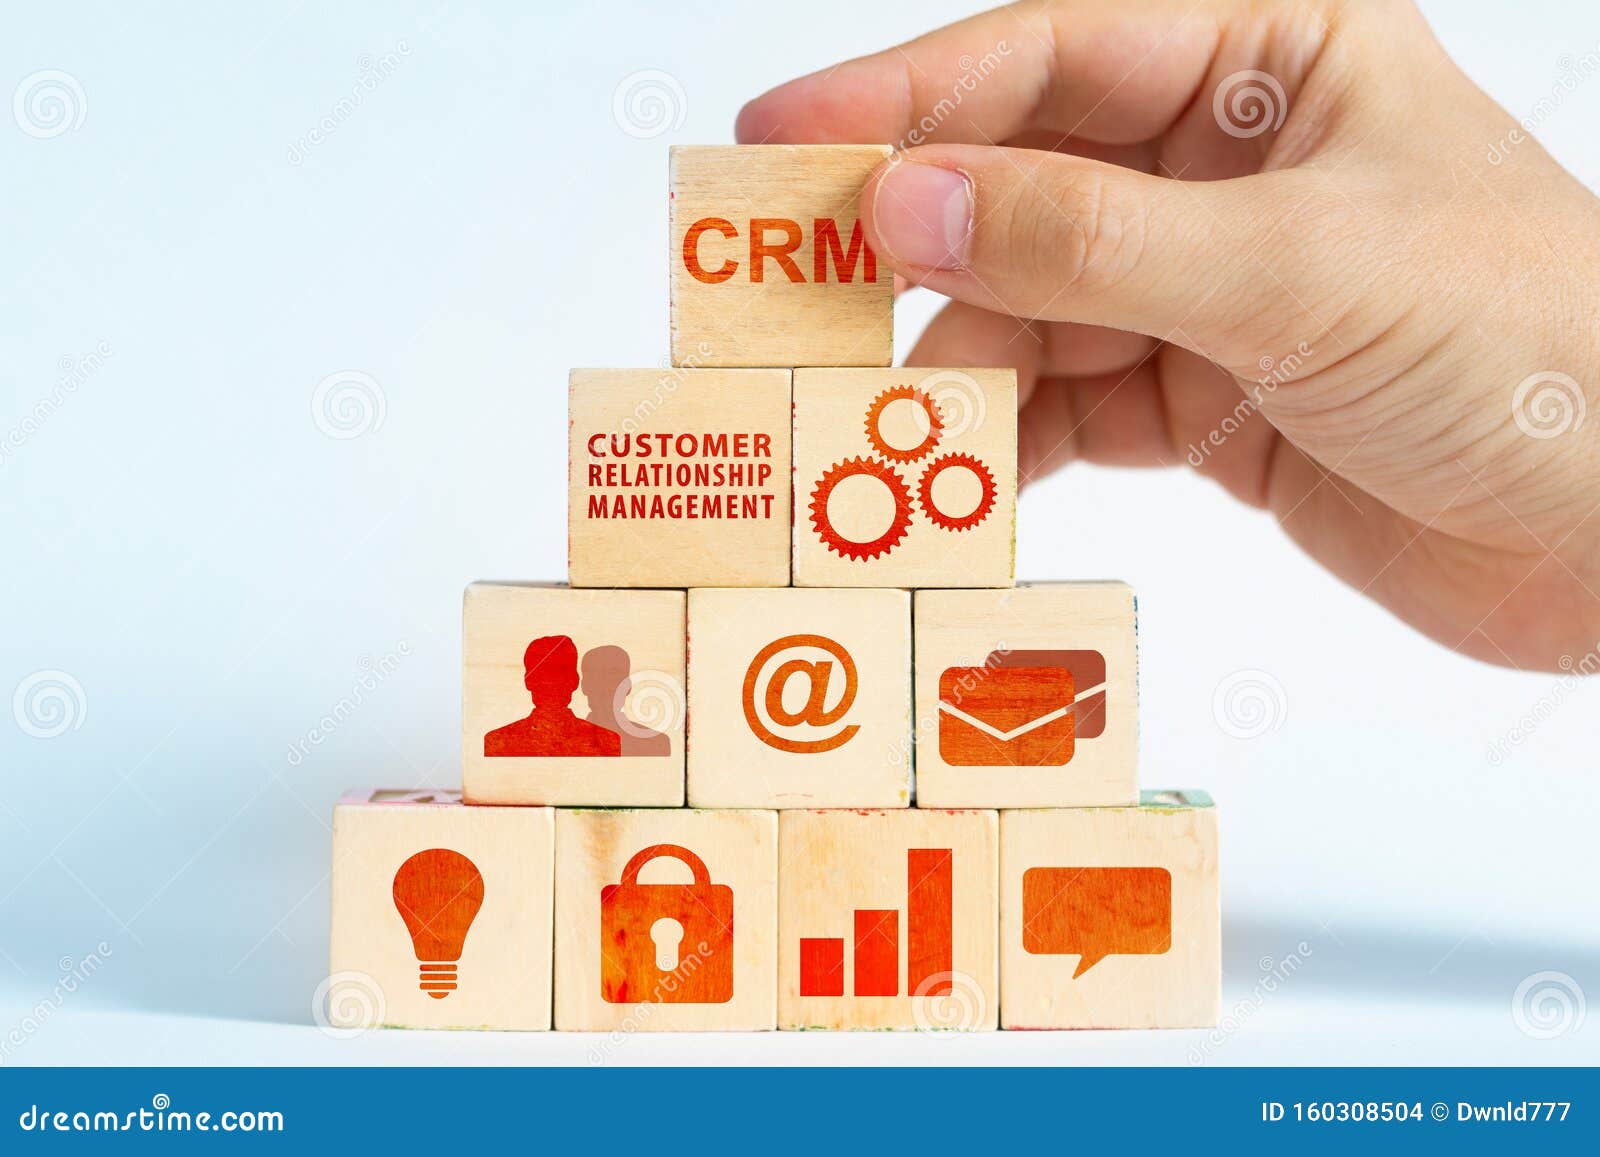 crm customer relationship management concept